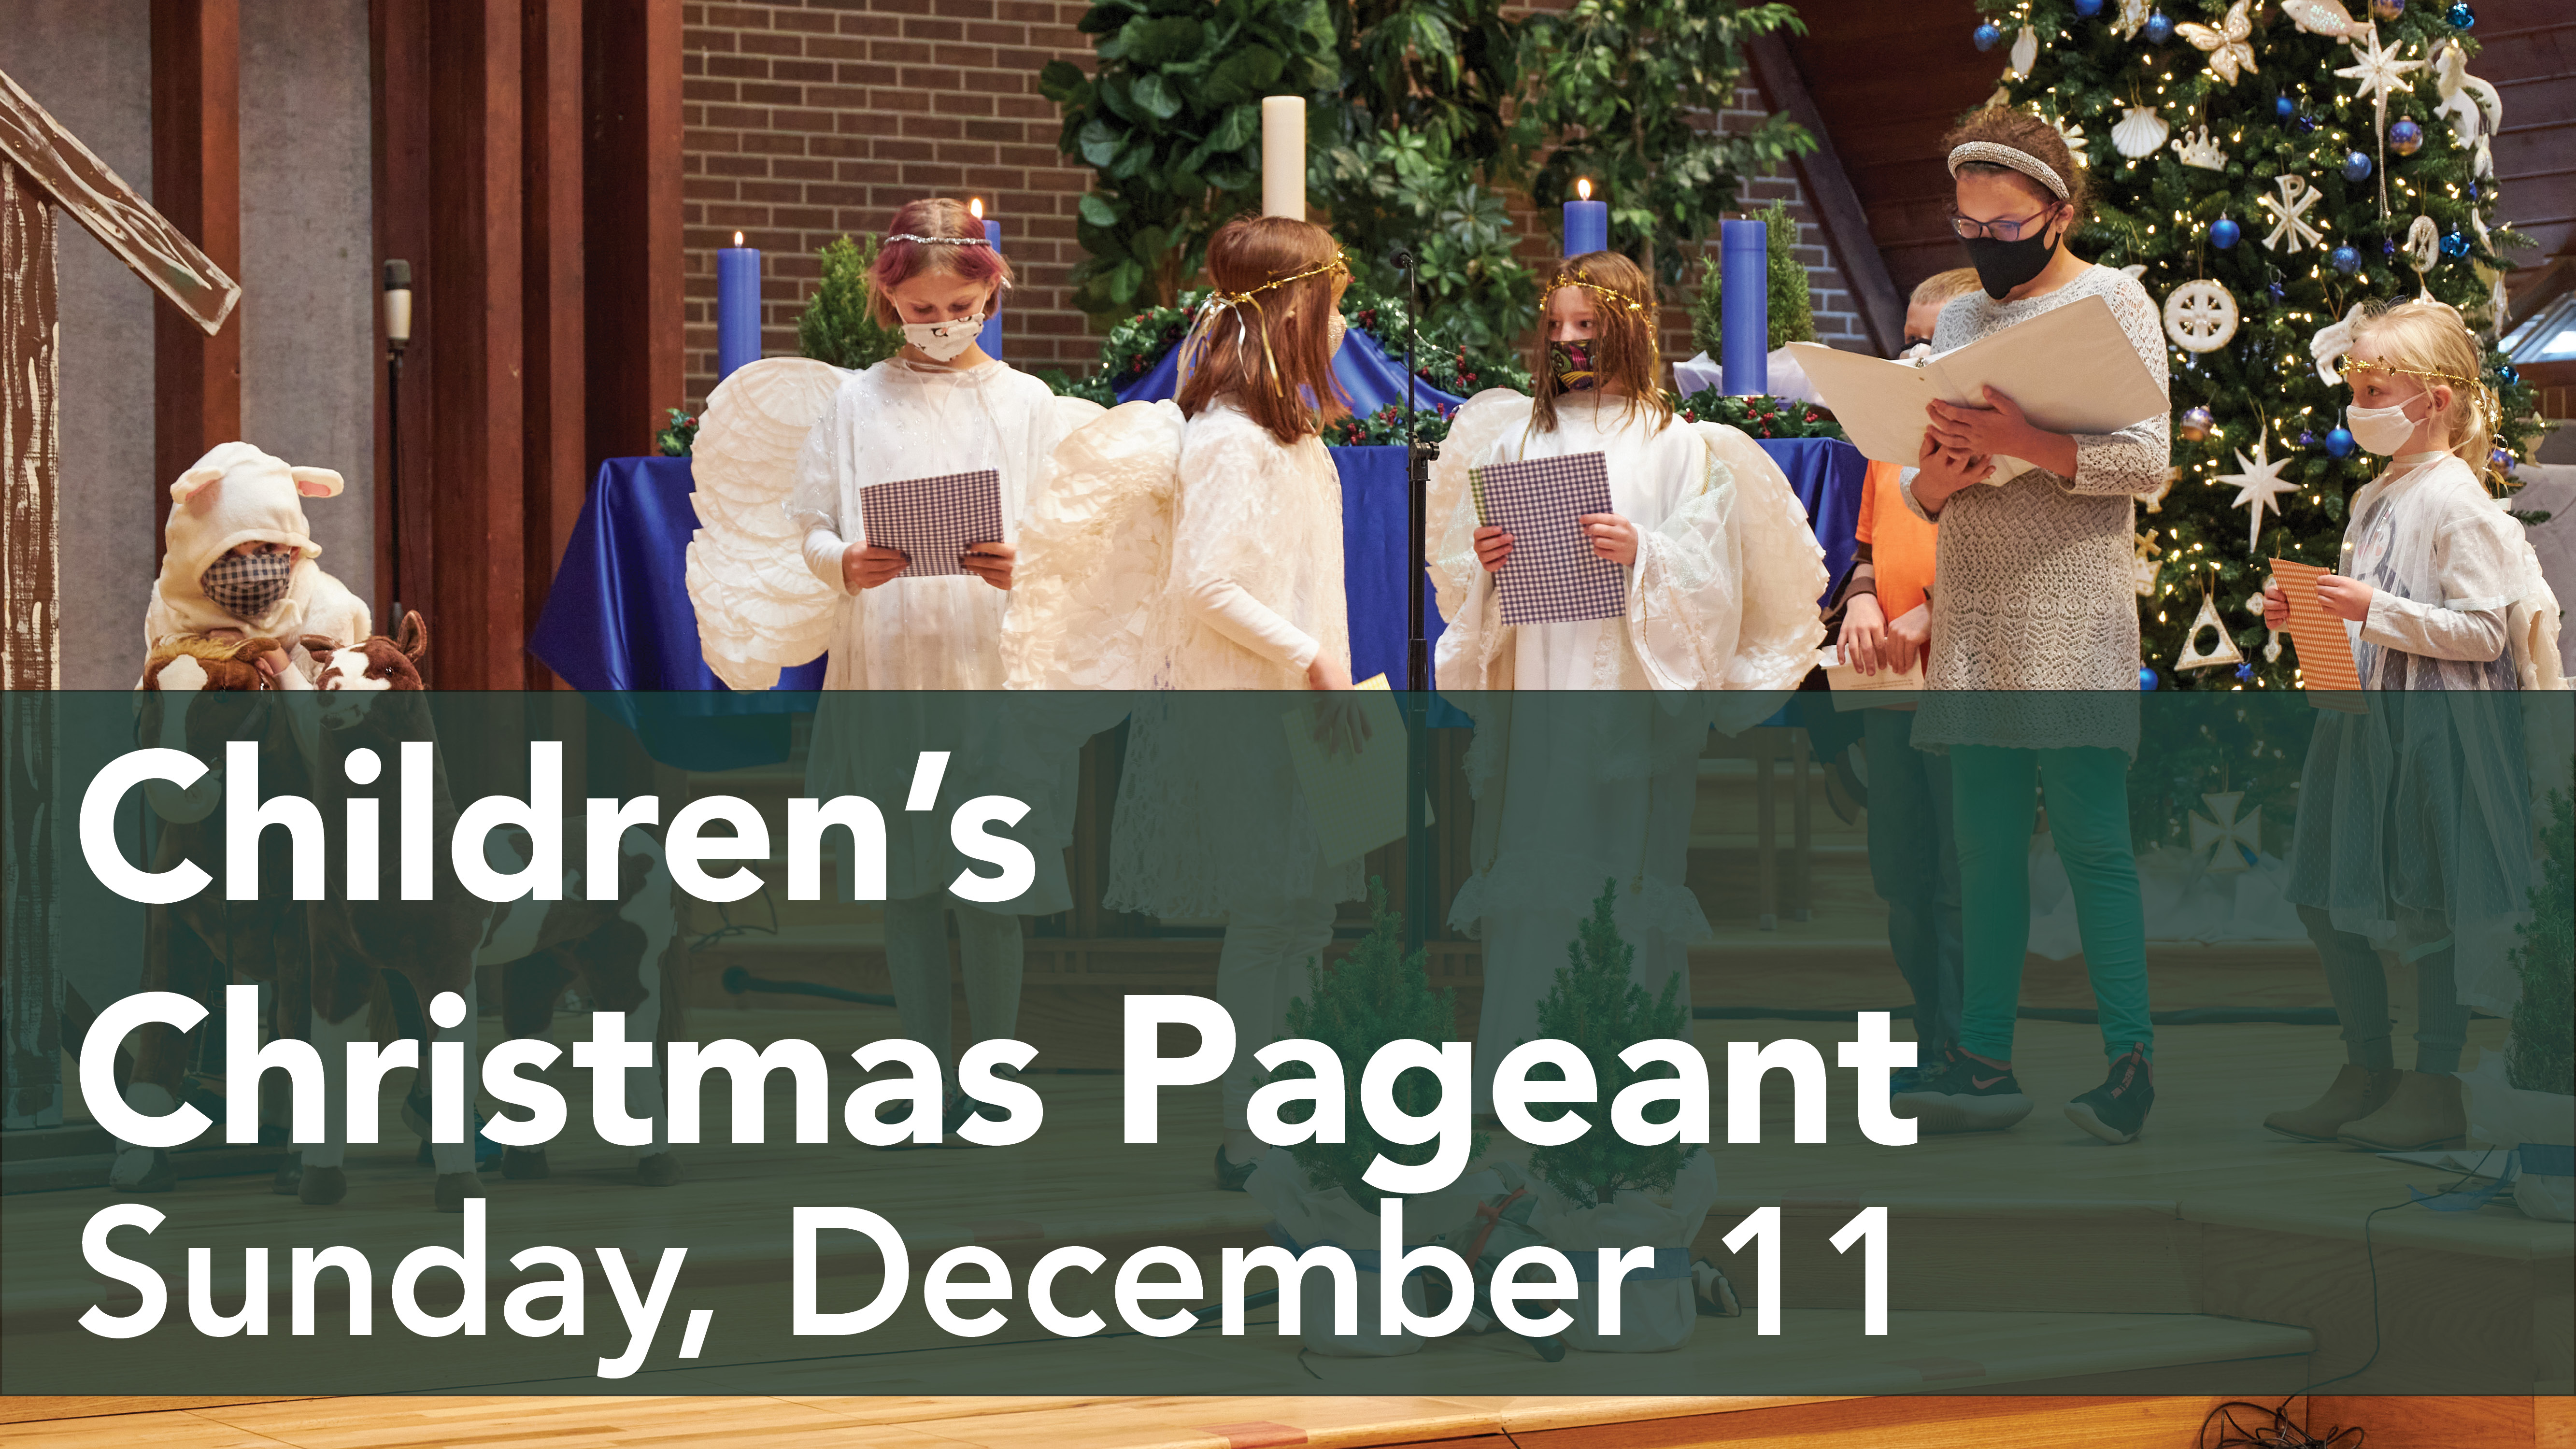 Announcement slide - Children's Christmas Pageant